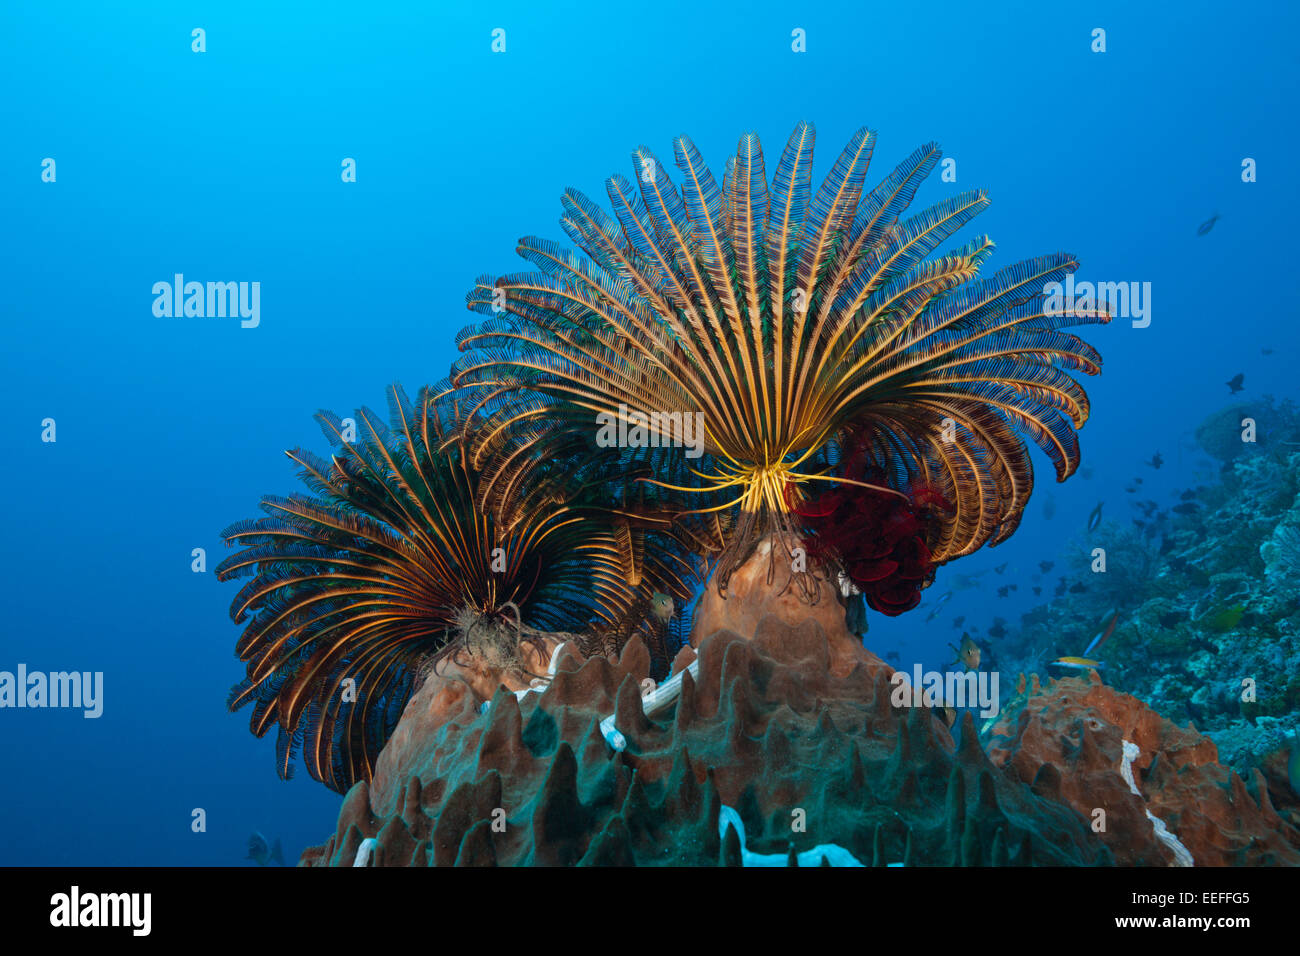 Featherstars in Current, Comaster schlegeli, Tanimbar Islands, Moluccas, Indonesia Stock Photo